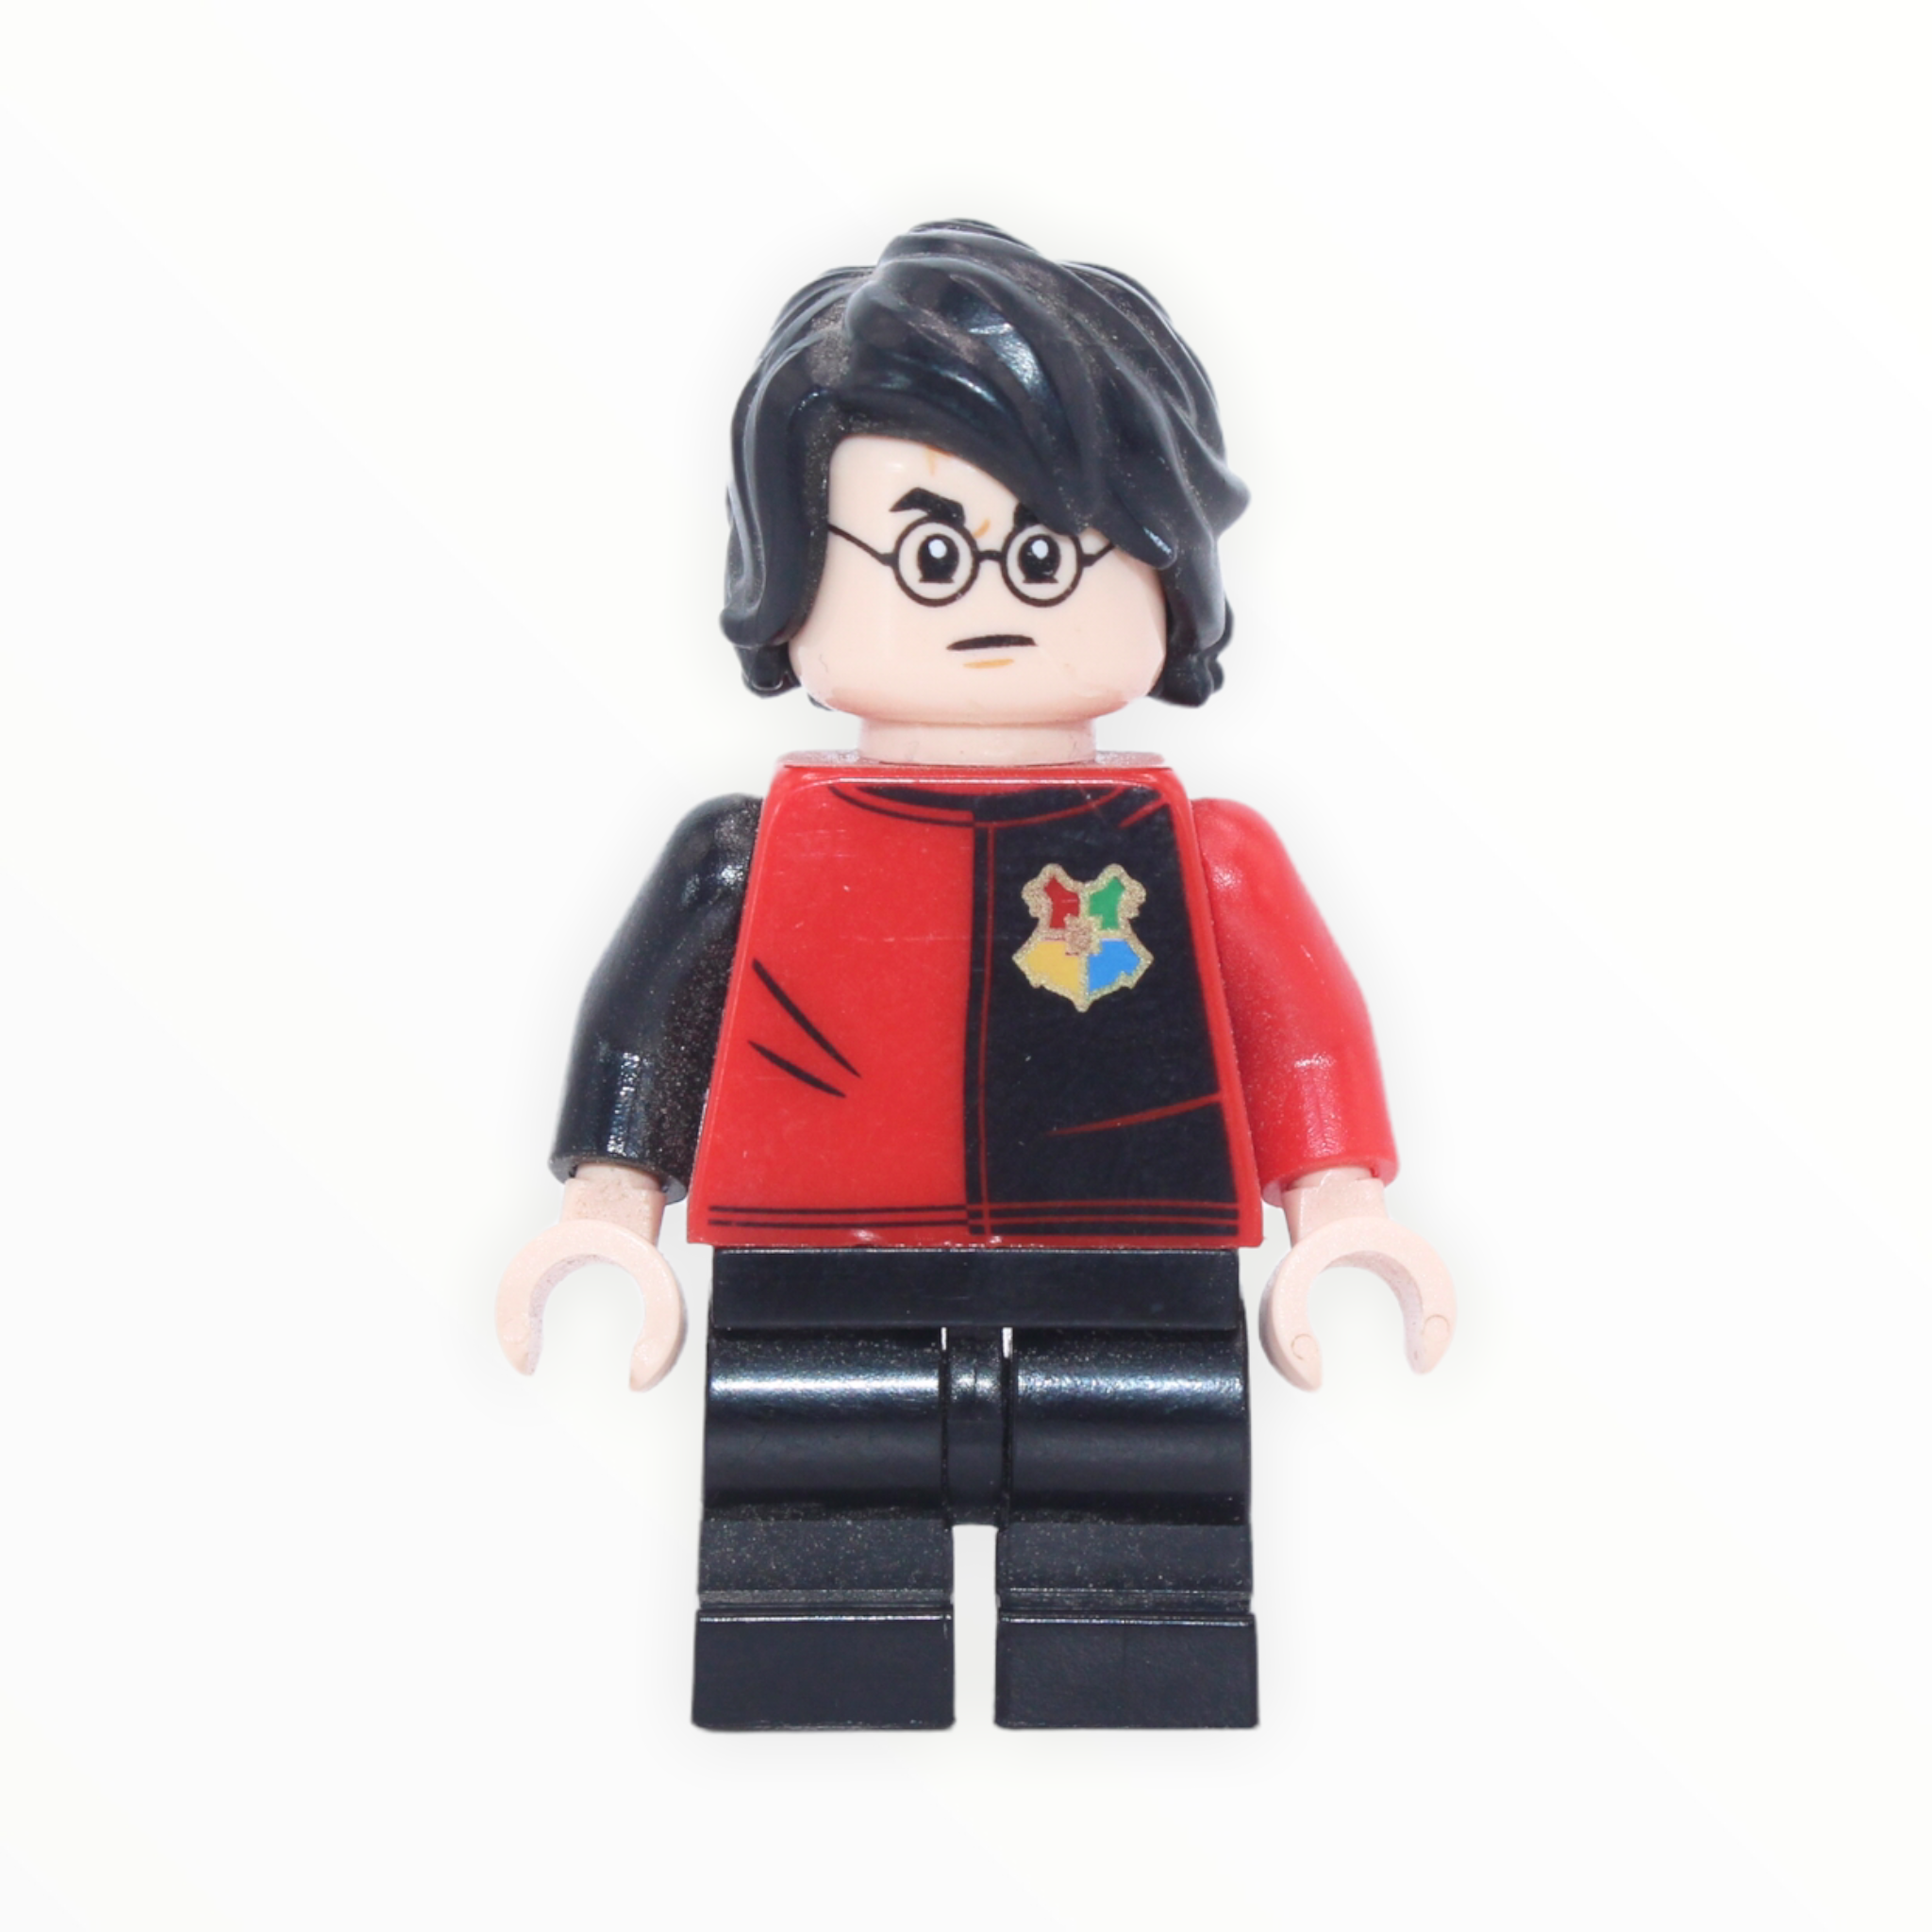 Harry Potter (Tournament uniform, black medium legs, 2019)